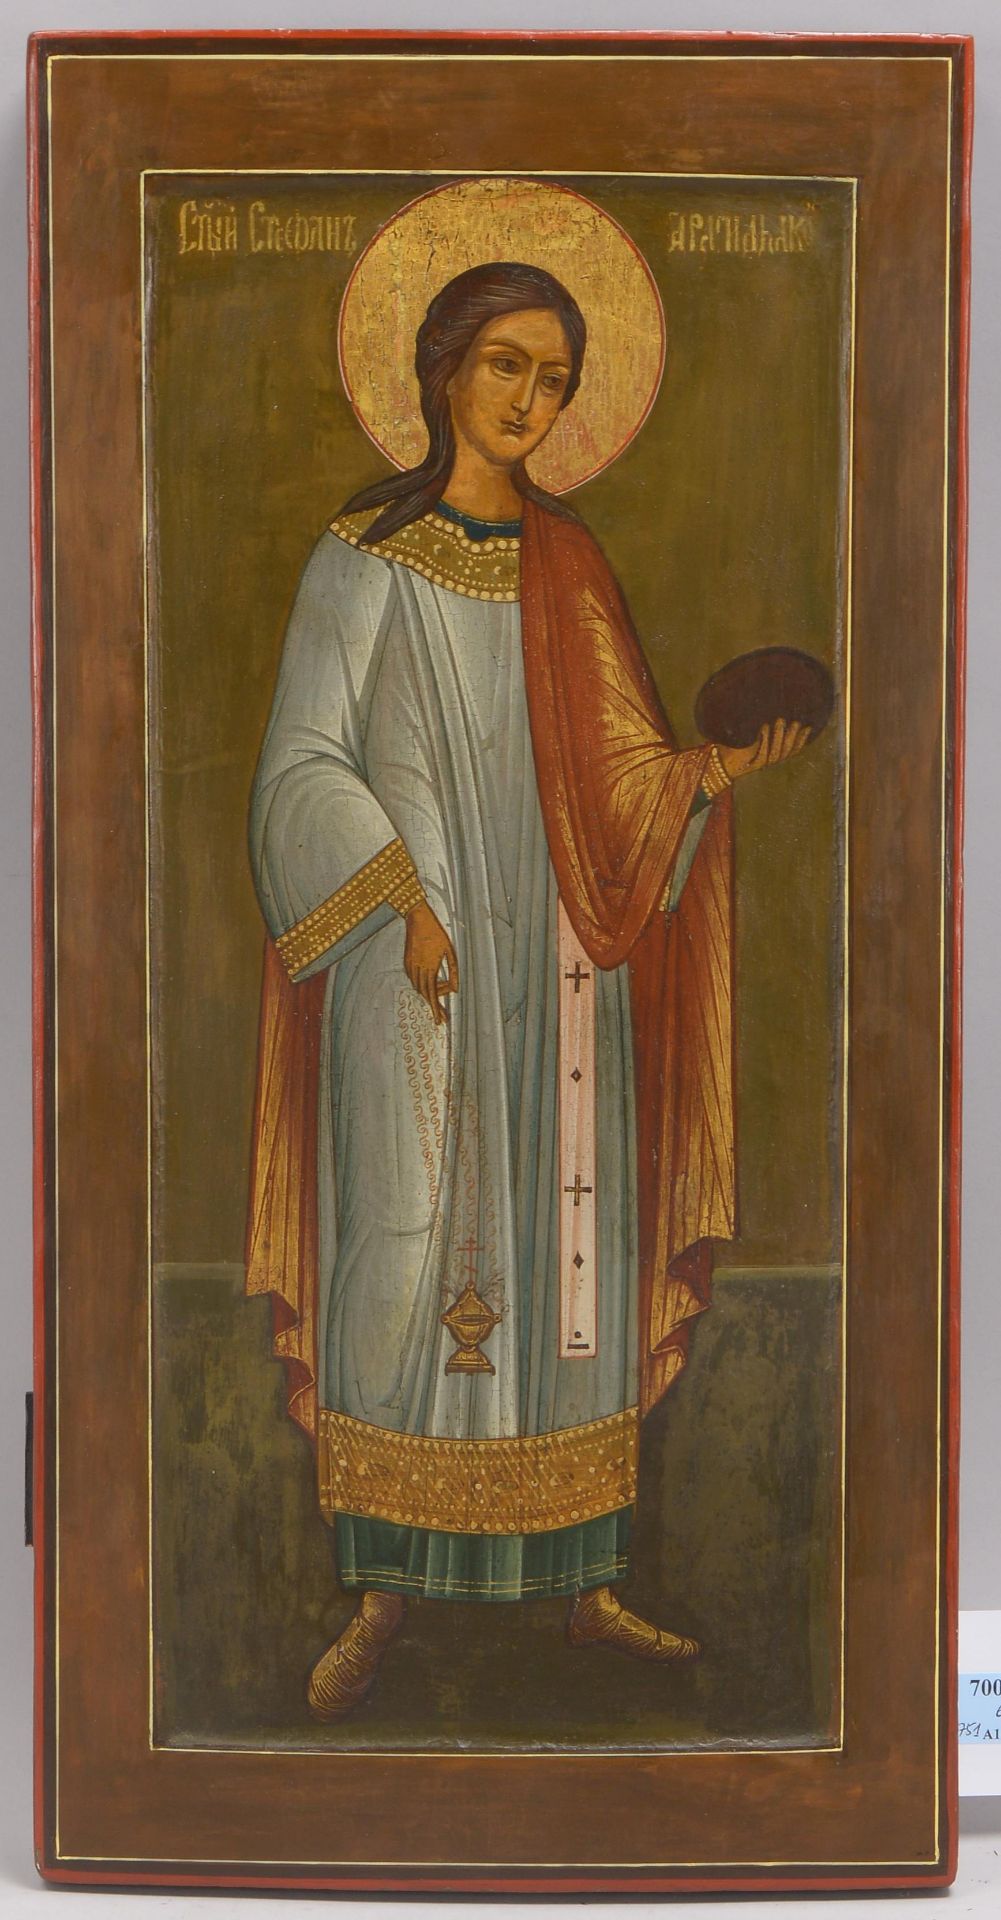 Ikone (Russland, 19. Jahrhundert), 'Heiliger Erstmärtyrer und Erzdiakon Stephanus' (ganzfigurige Dar